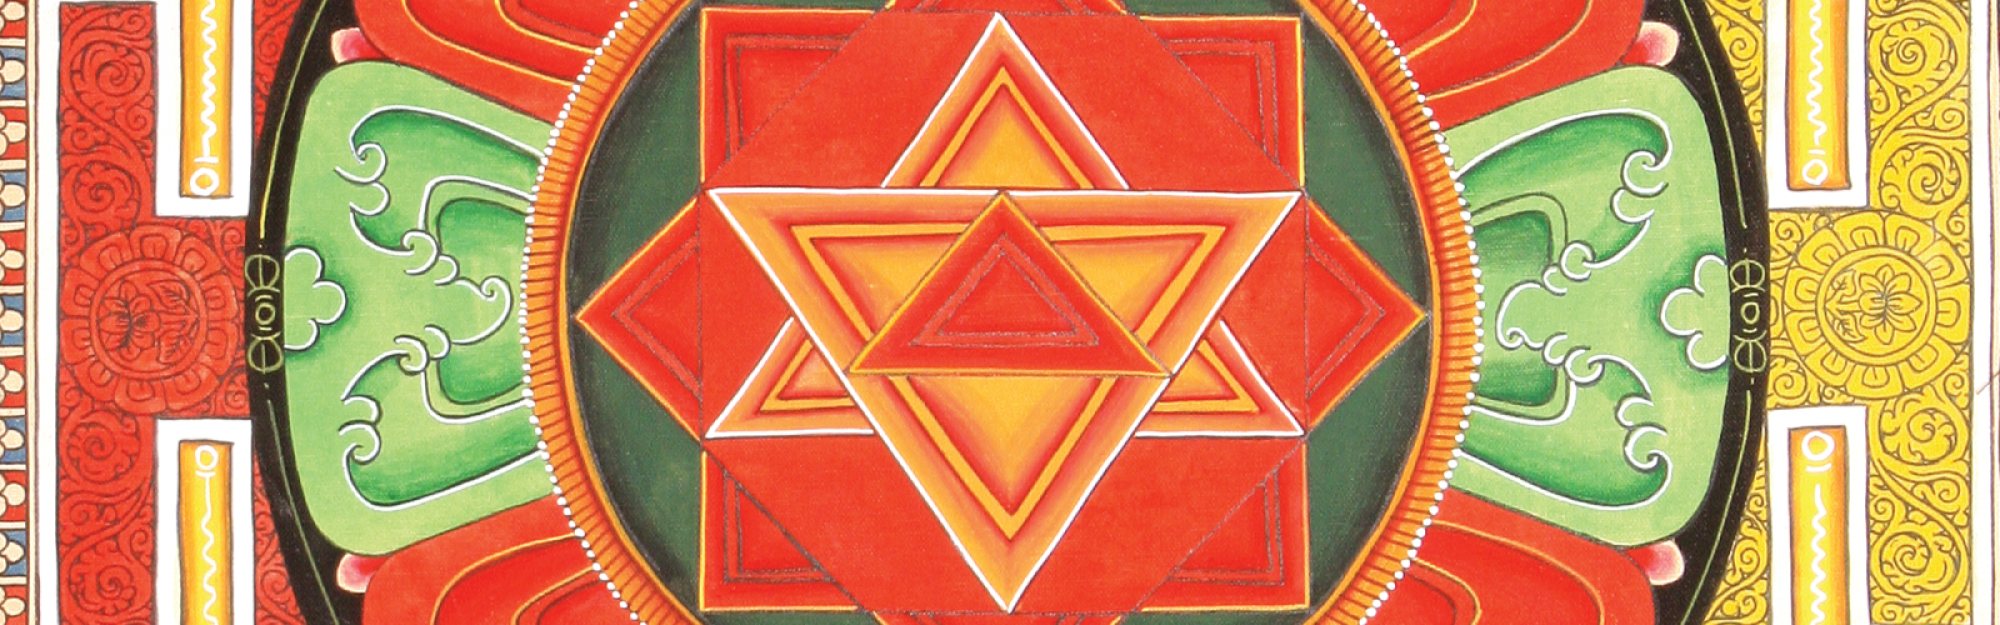 Dharma Stars Packages